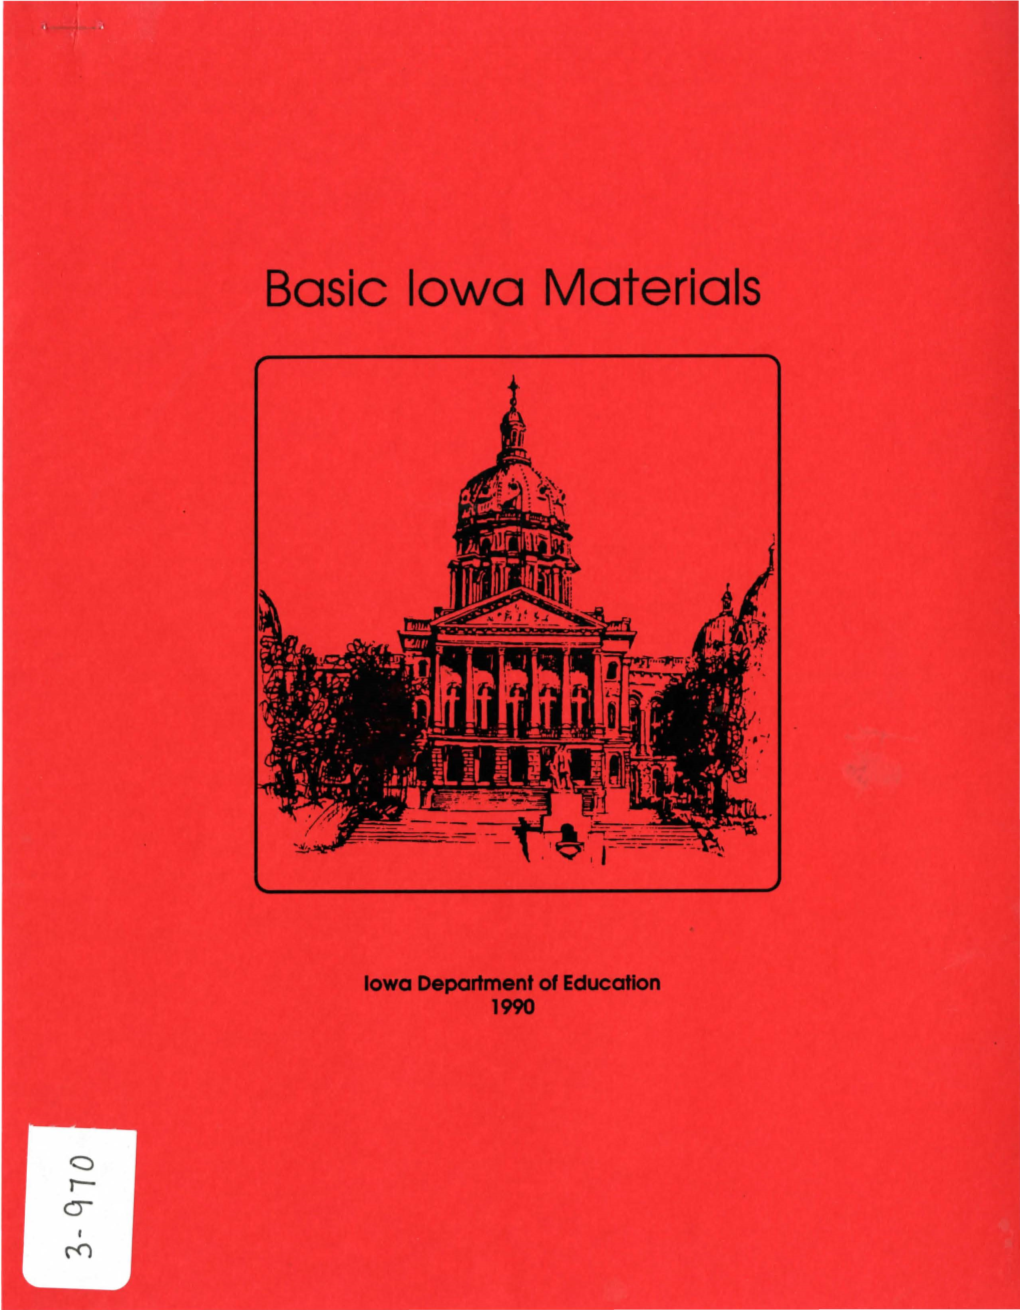 Basic Iowa Materials.Pdf